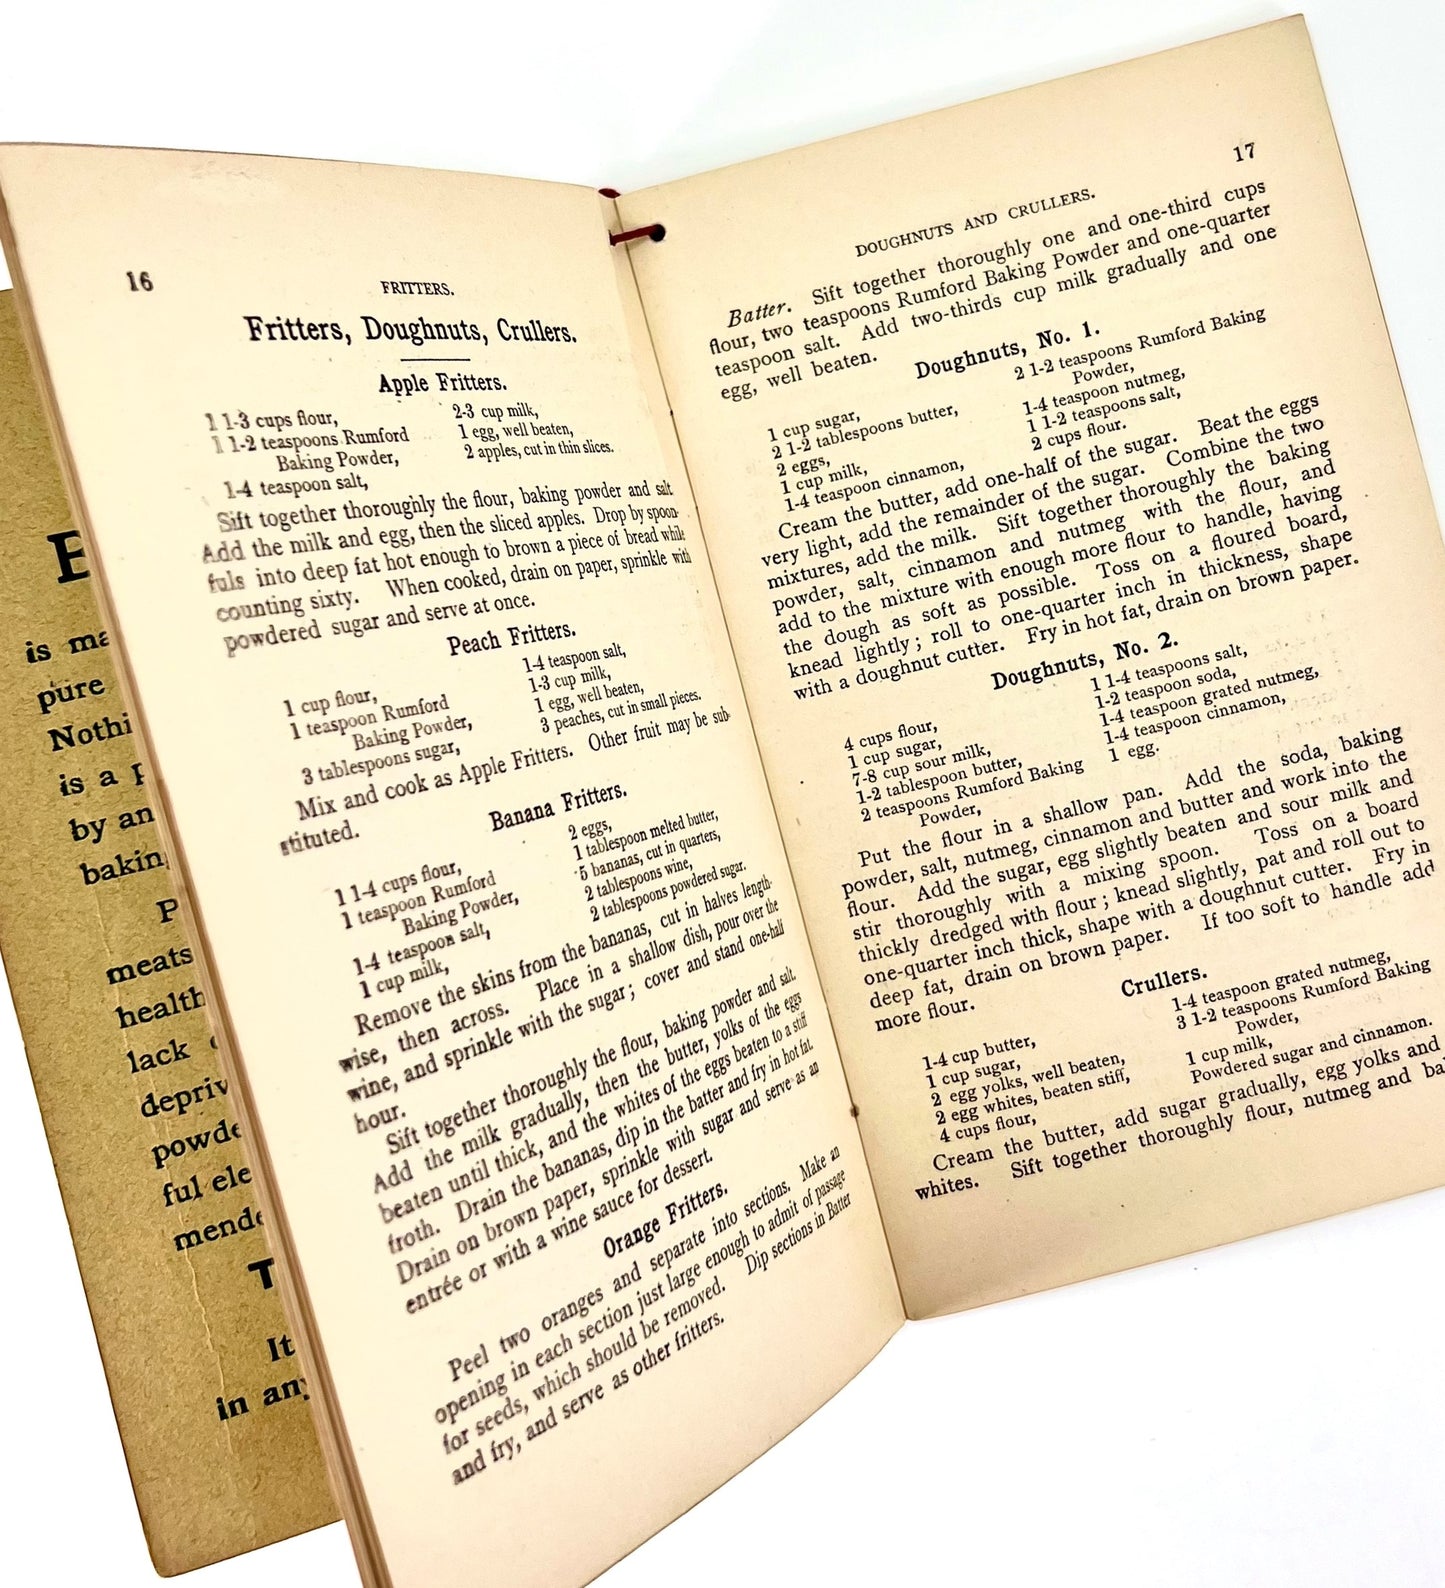 The Rumford Cook Book, by Fannie Farmer, c. 1910